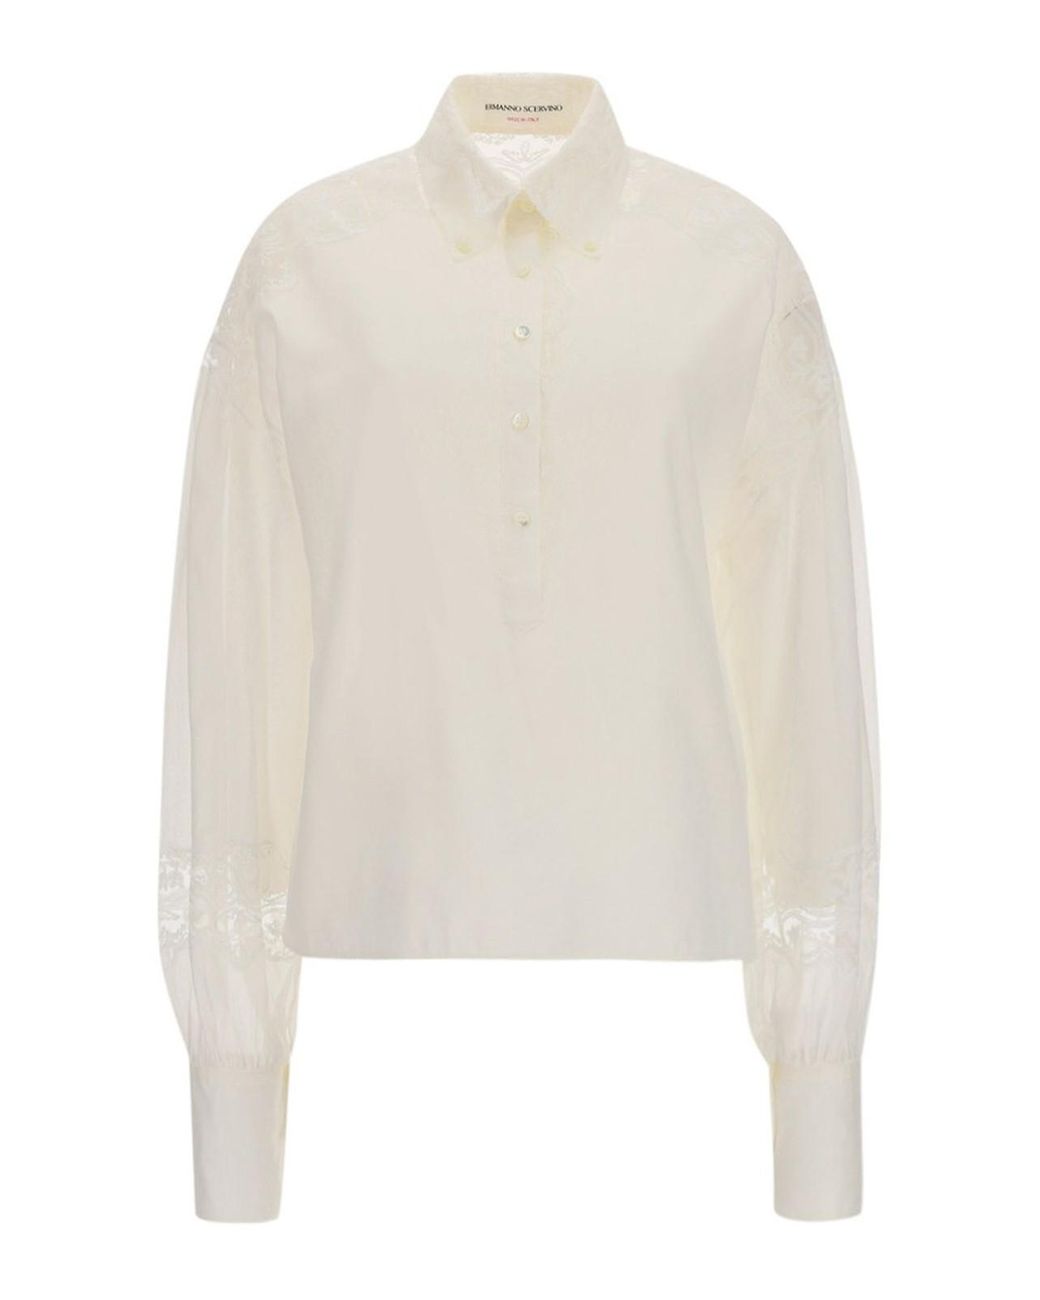 Ermanno Scervino Lace-trim Cotton Shirt in White - Lyst